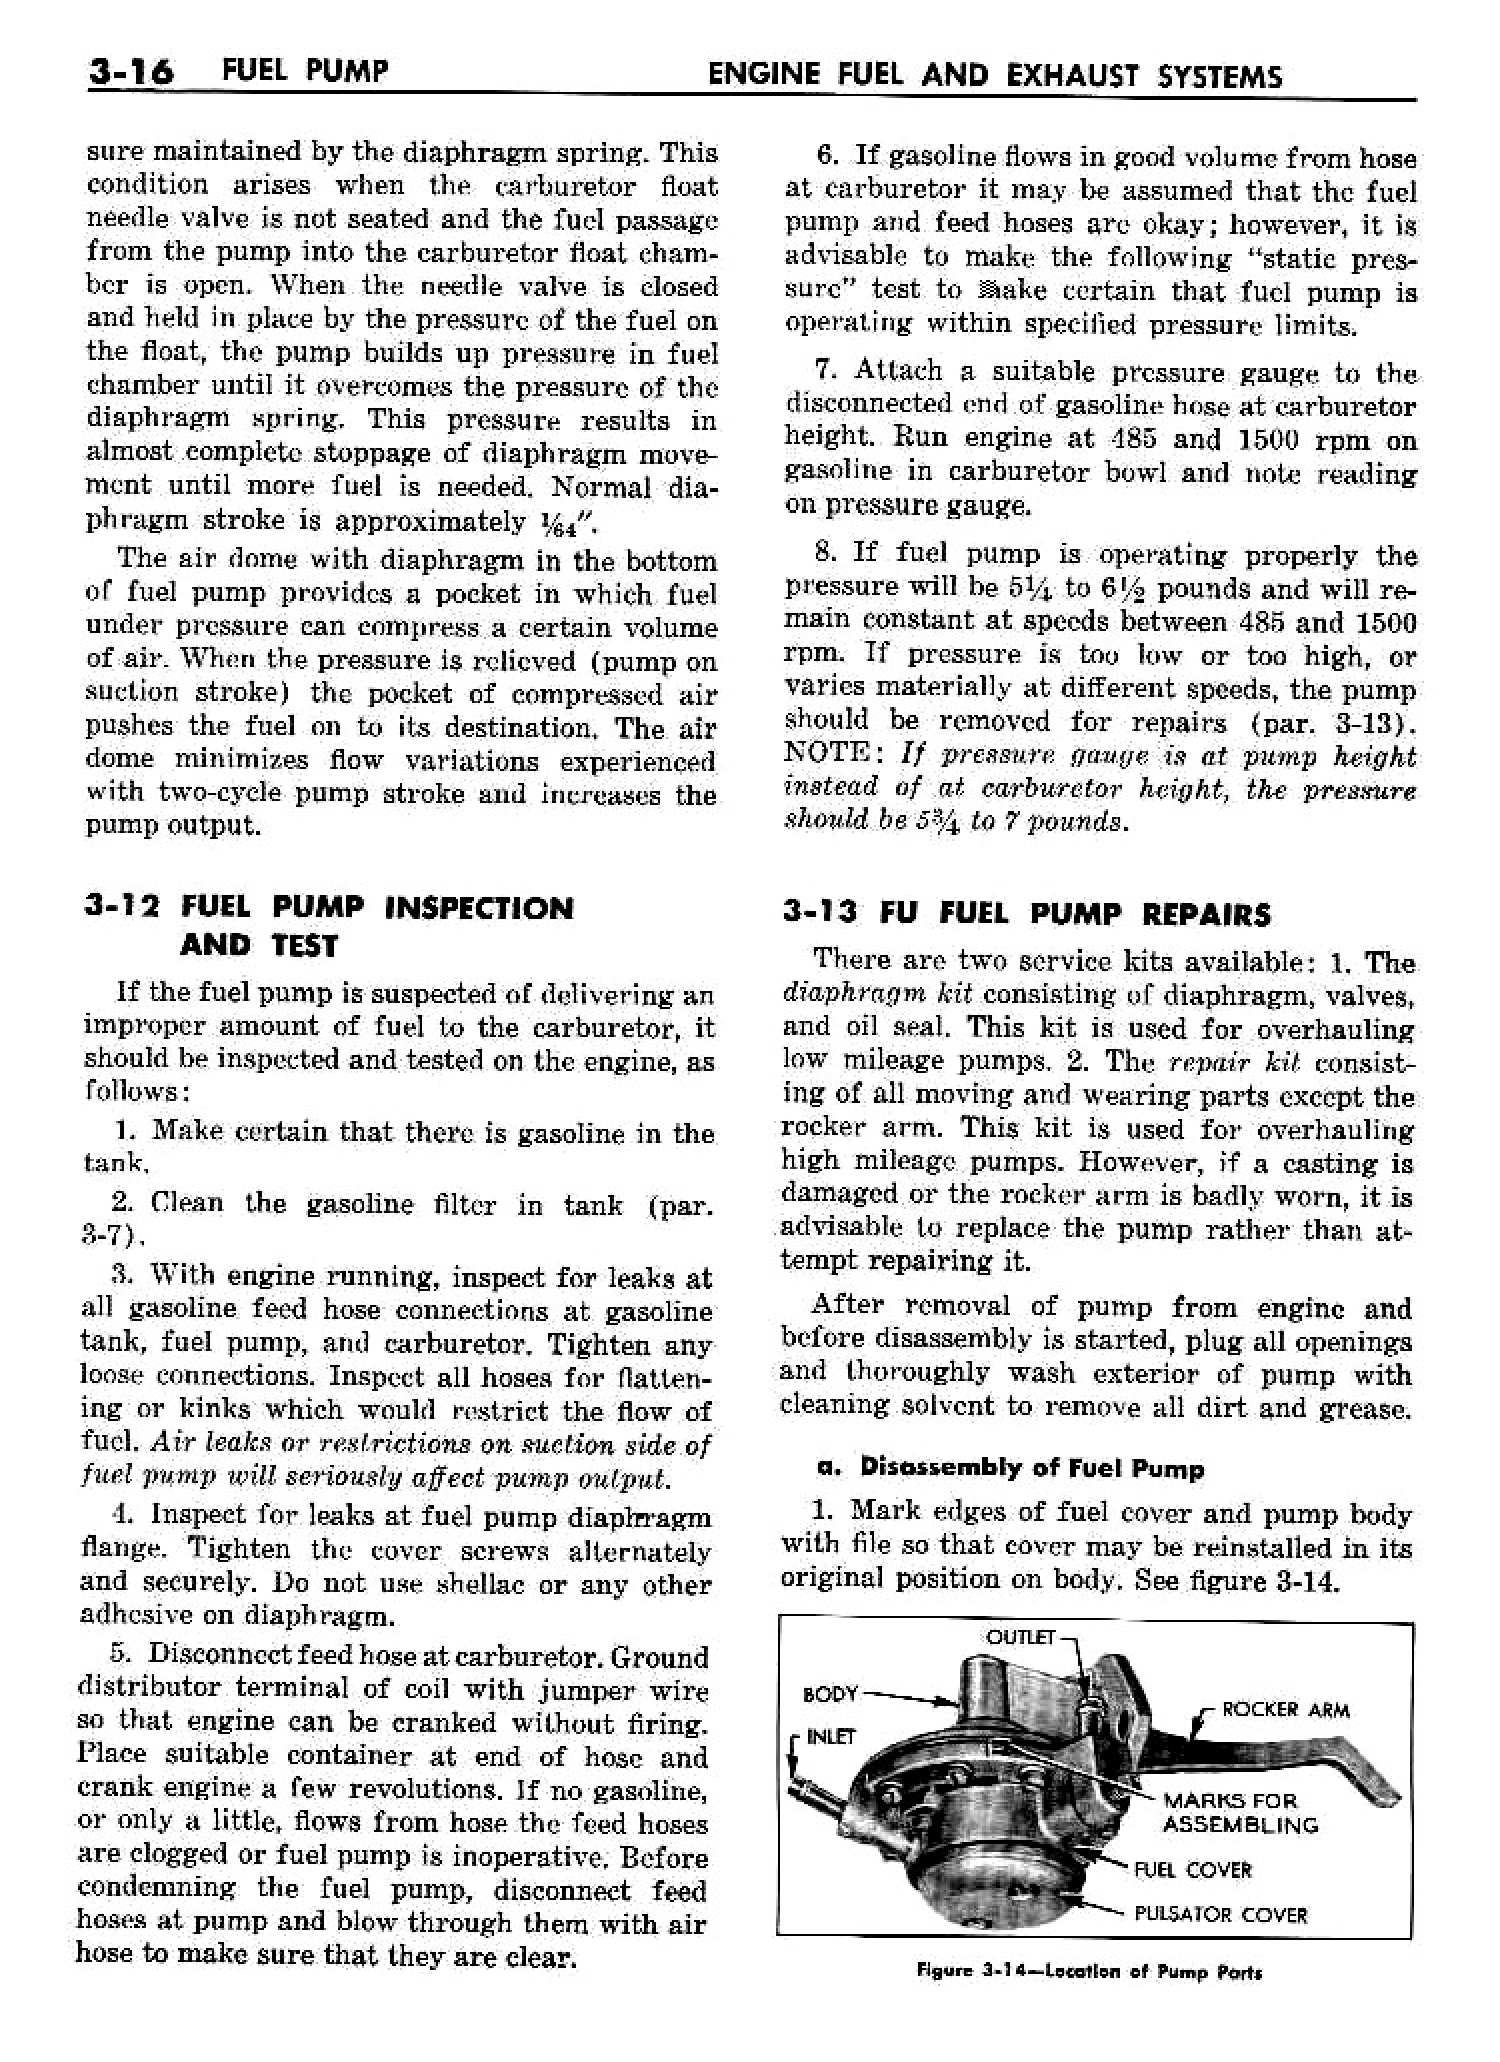 n_04 1958 Buick Shop Manual - Engine Fuel & Exhaust_16.jpg